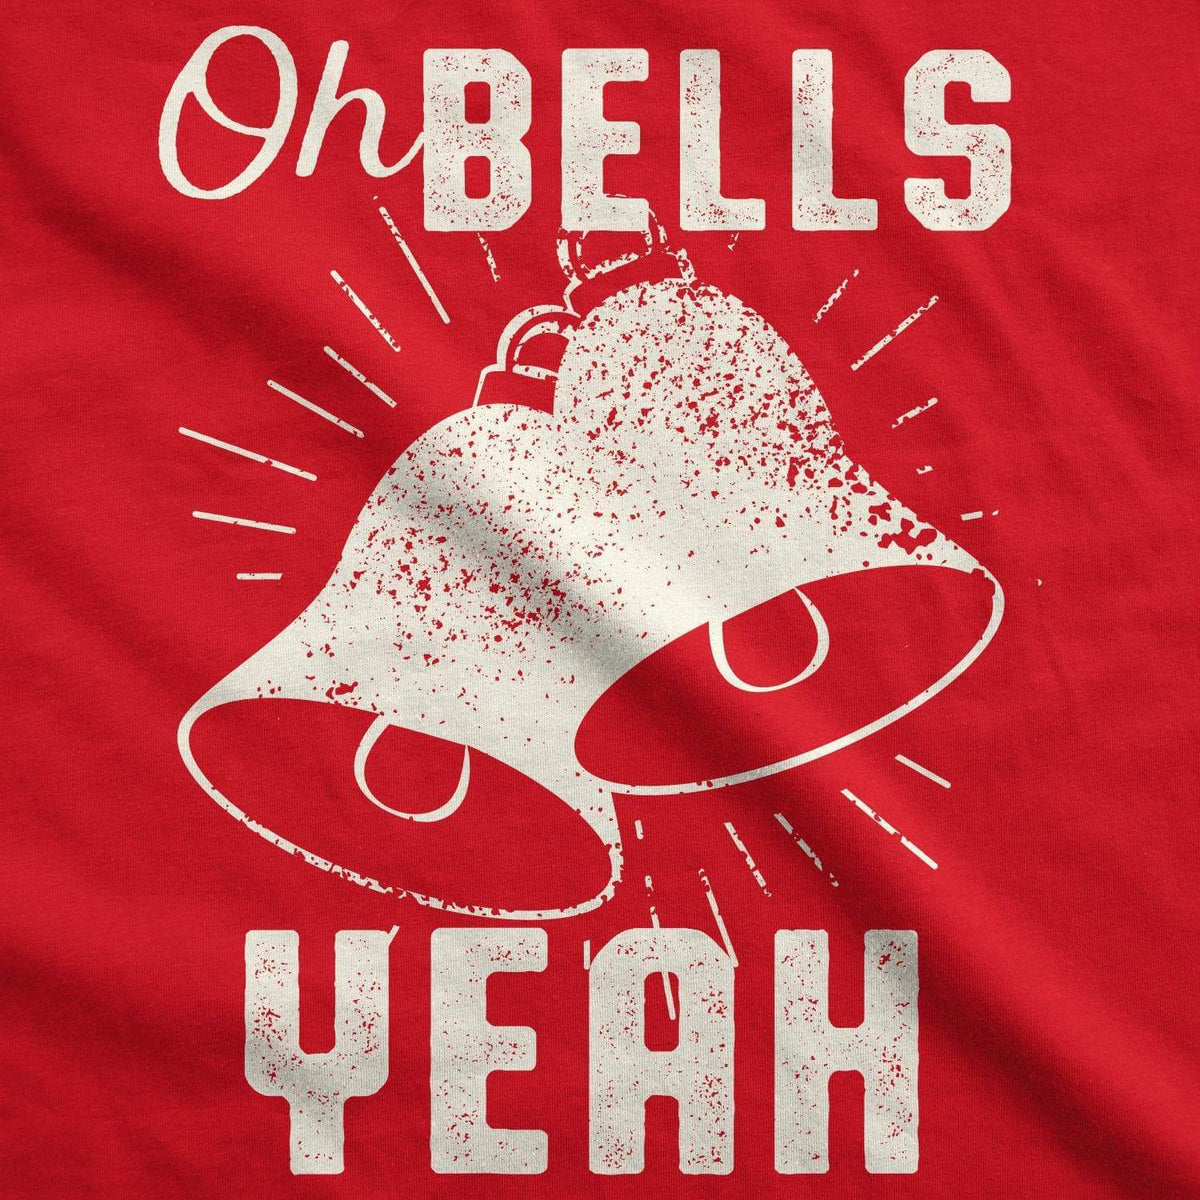 Oh Bells Yeah Women&#39;s Tshirt - Crazy Dog T-Shirts